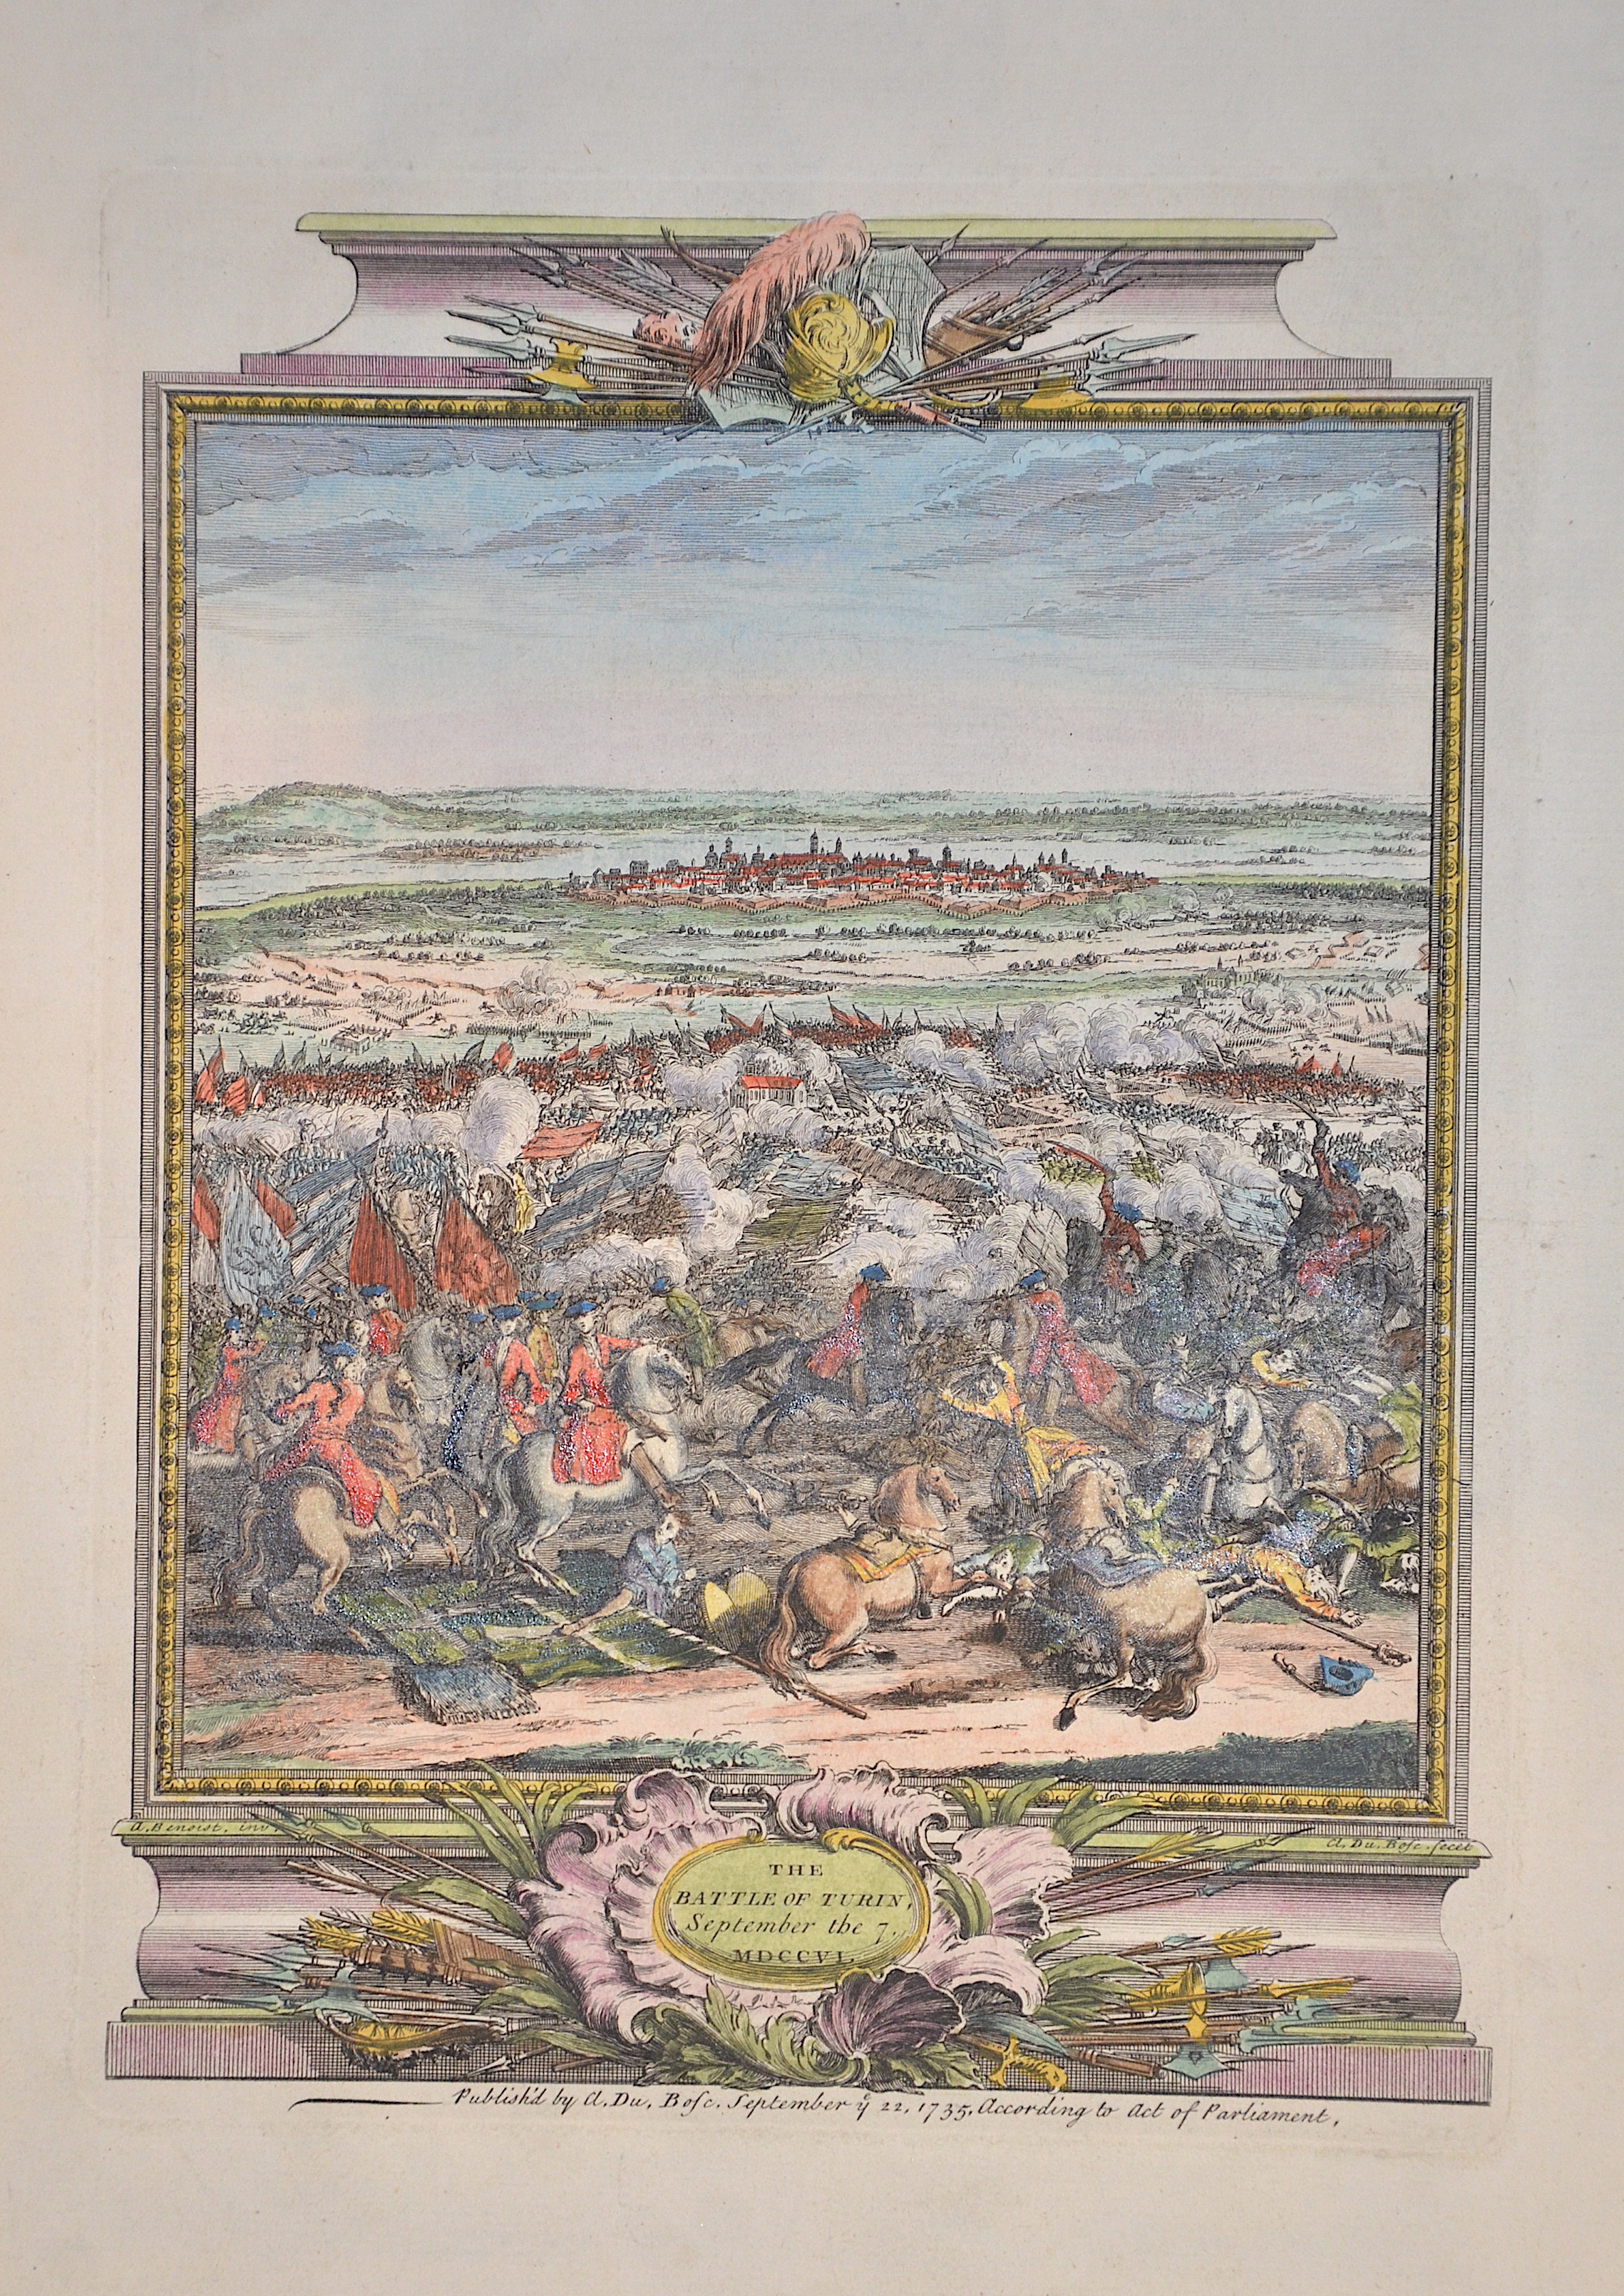 Benoist A. The Battle of Turin, September the 7. MDCCVI